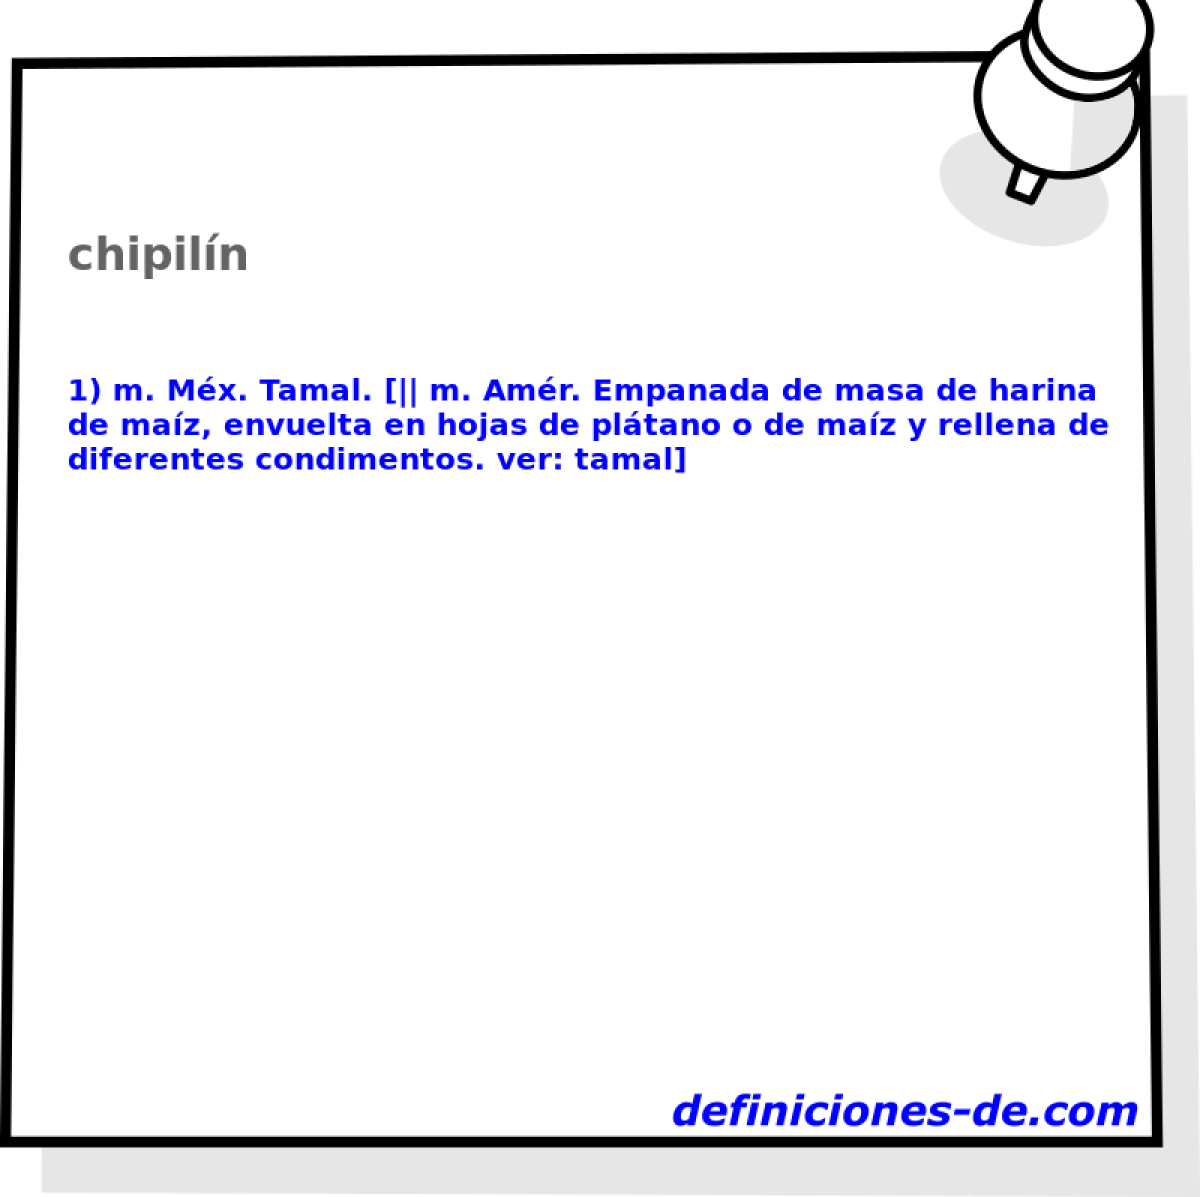 chipiln 